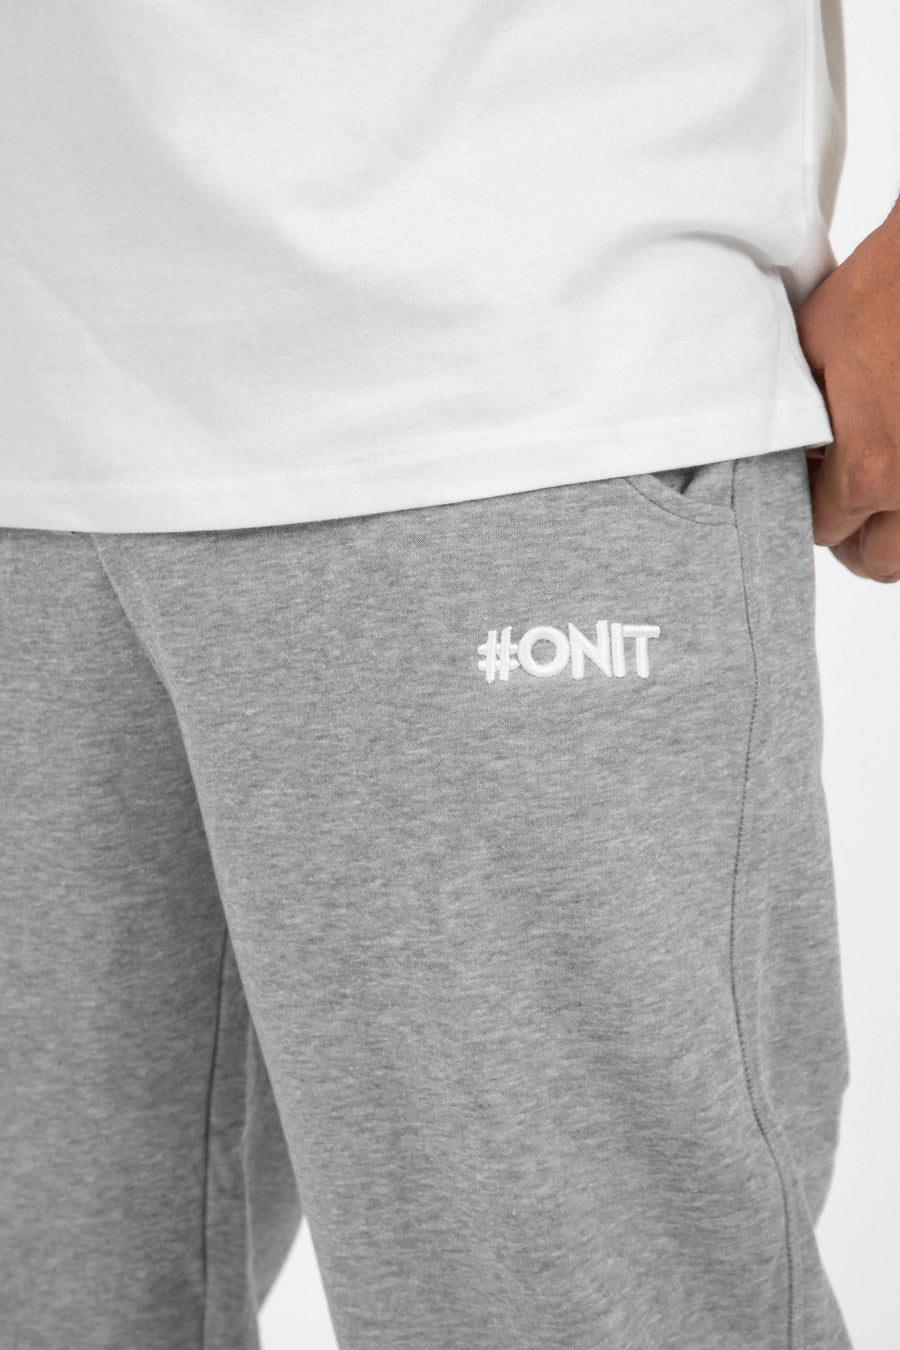 #ONIT Joggers - Grey